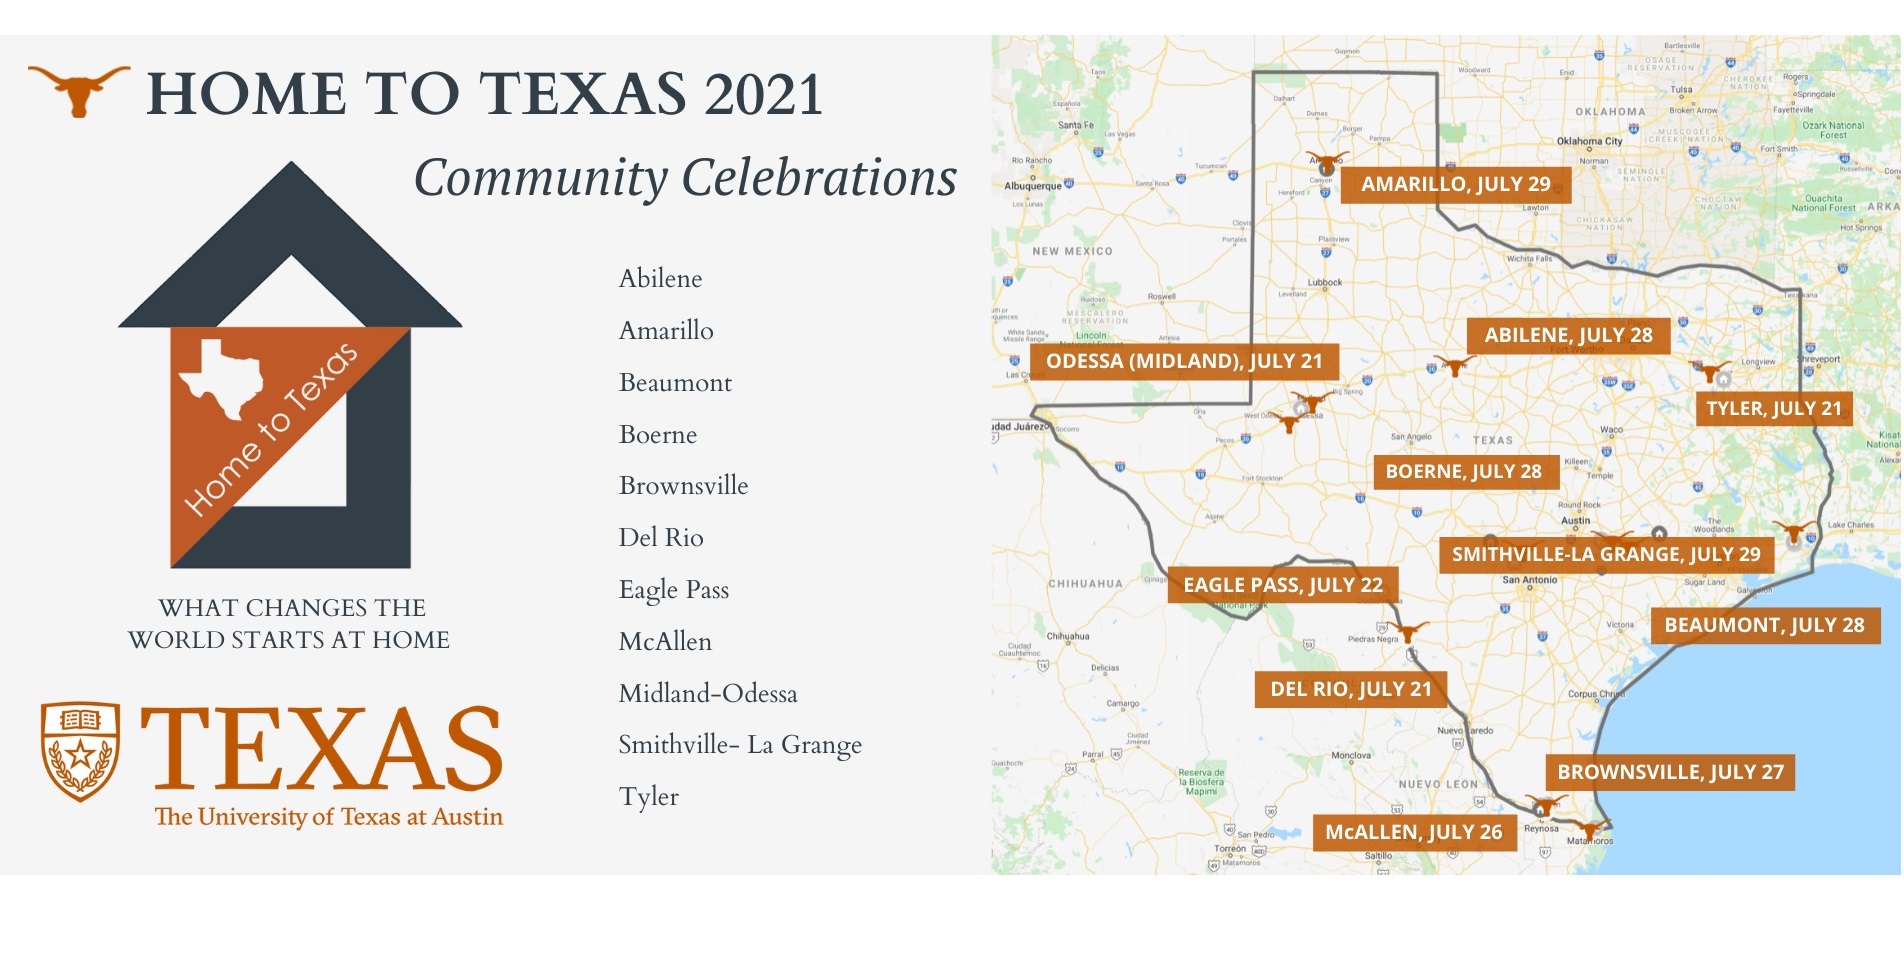 Home to Texas 2021 – Community Celebrations